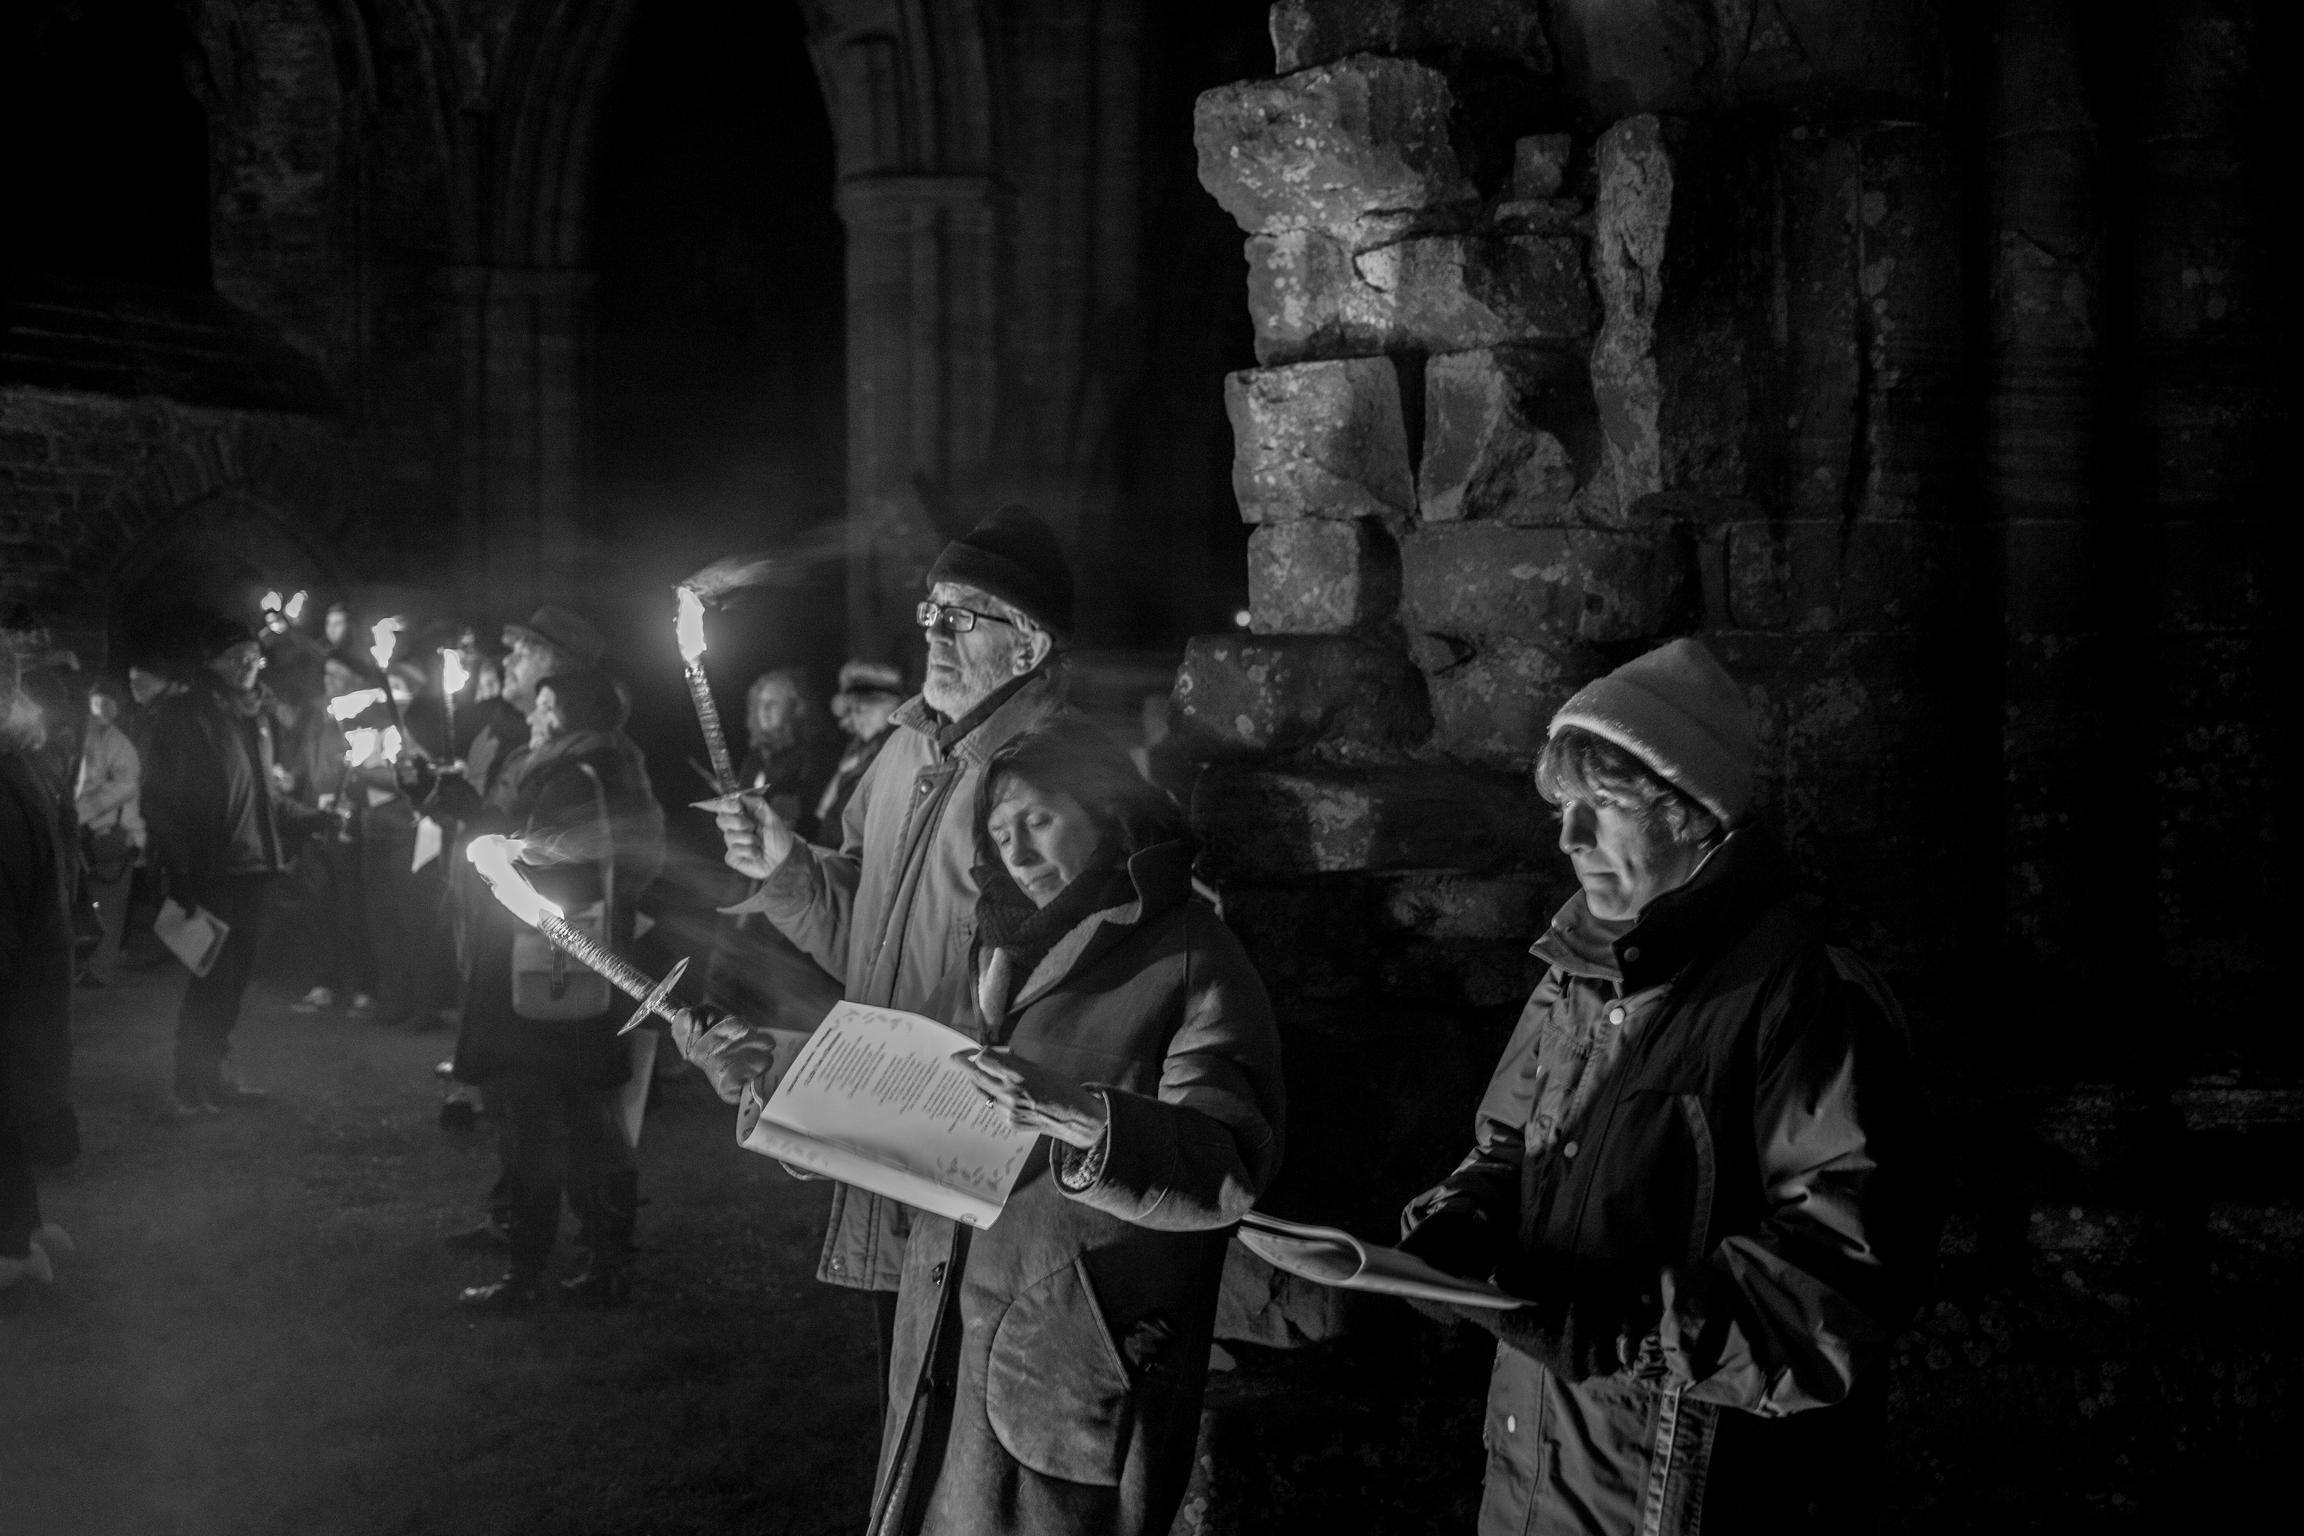 Torch Light Carol Service at Tintern Abbey with Martin Singers. Tintern, Wales